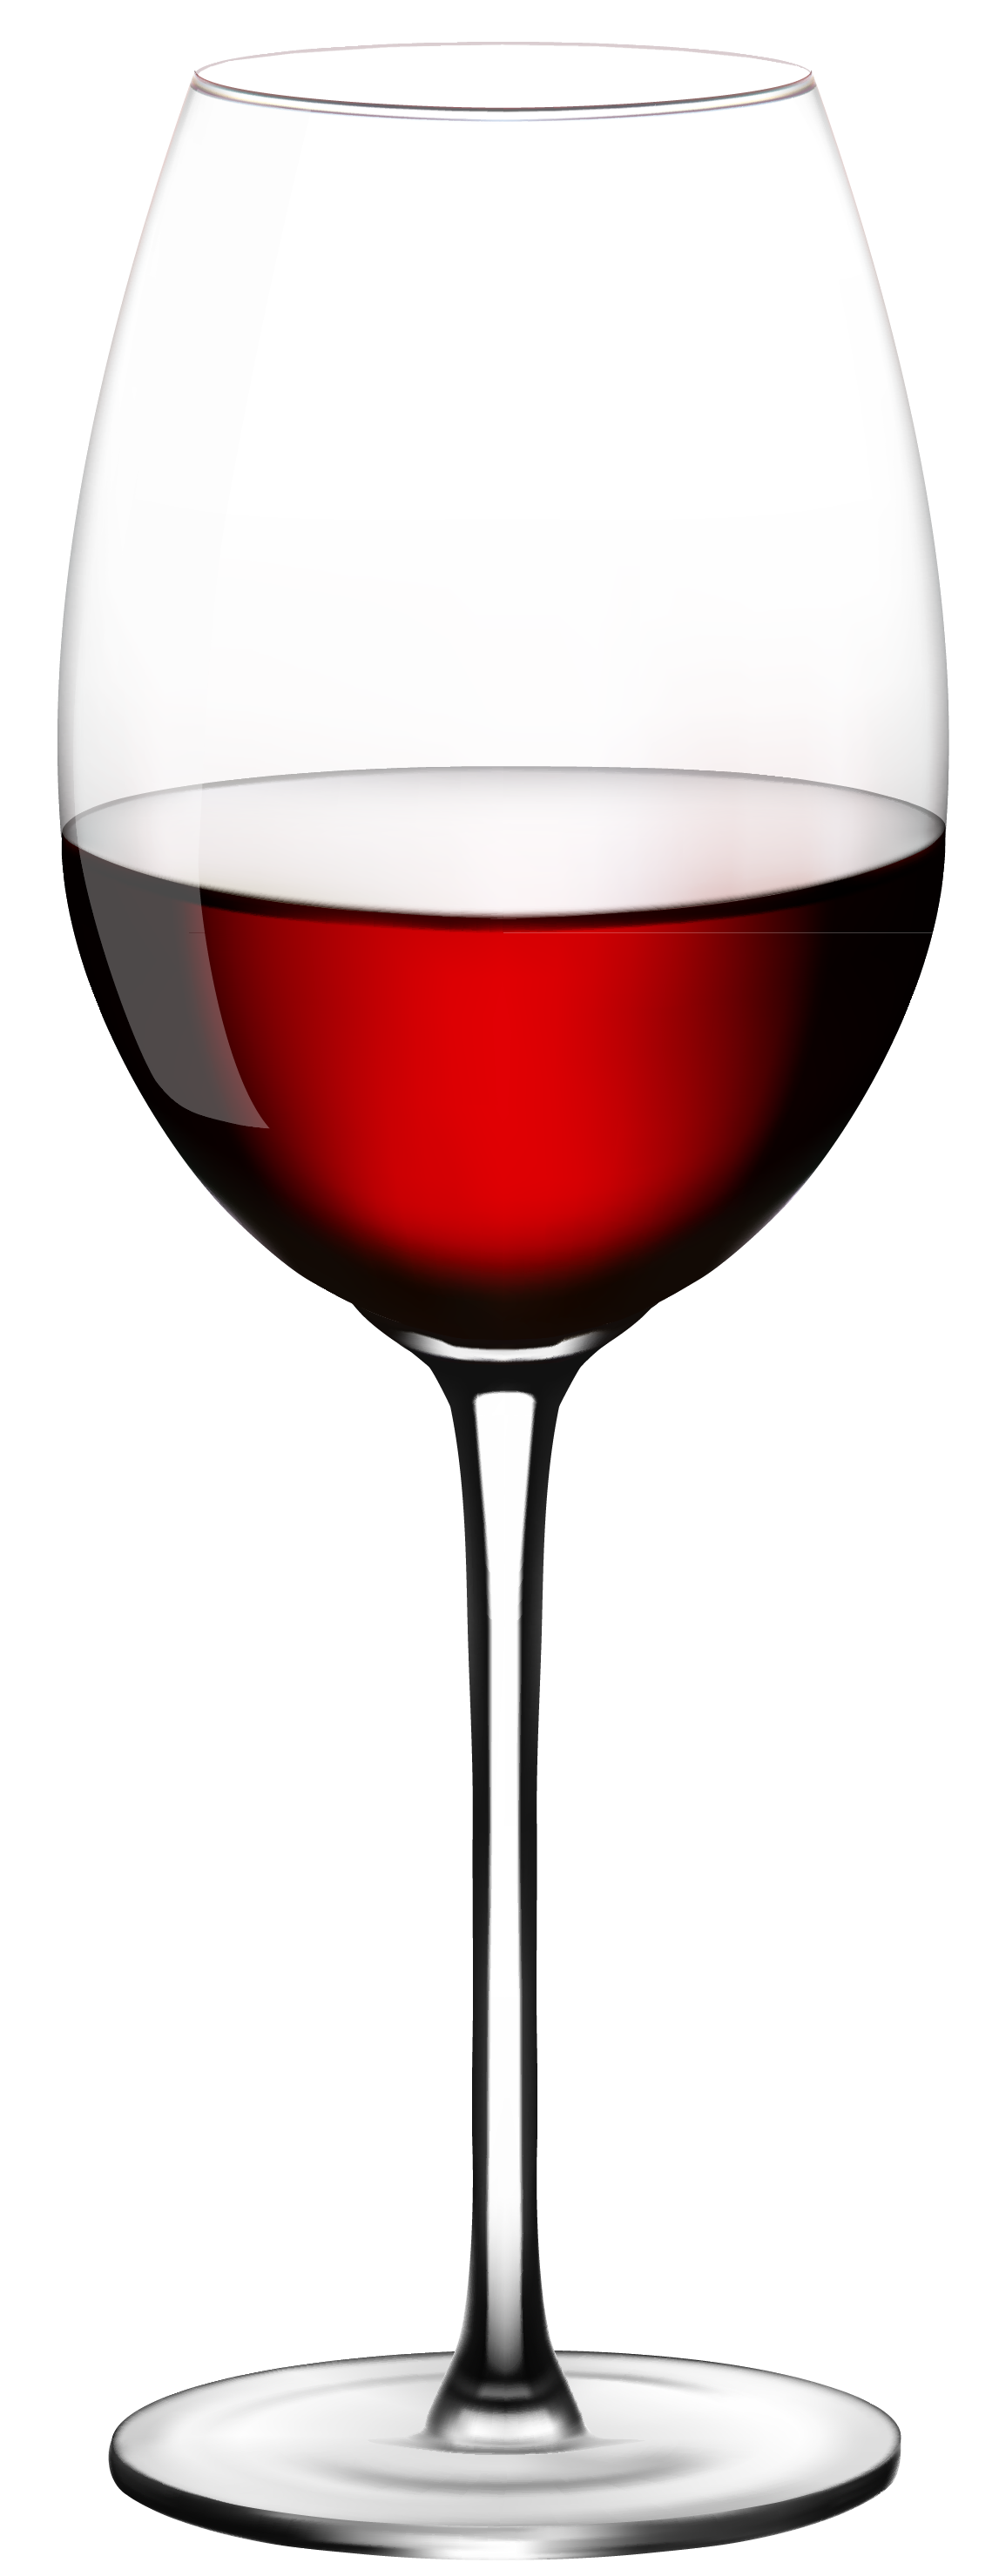 glass clipart wine glass